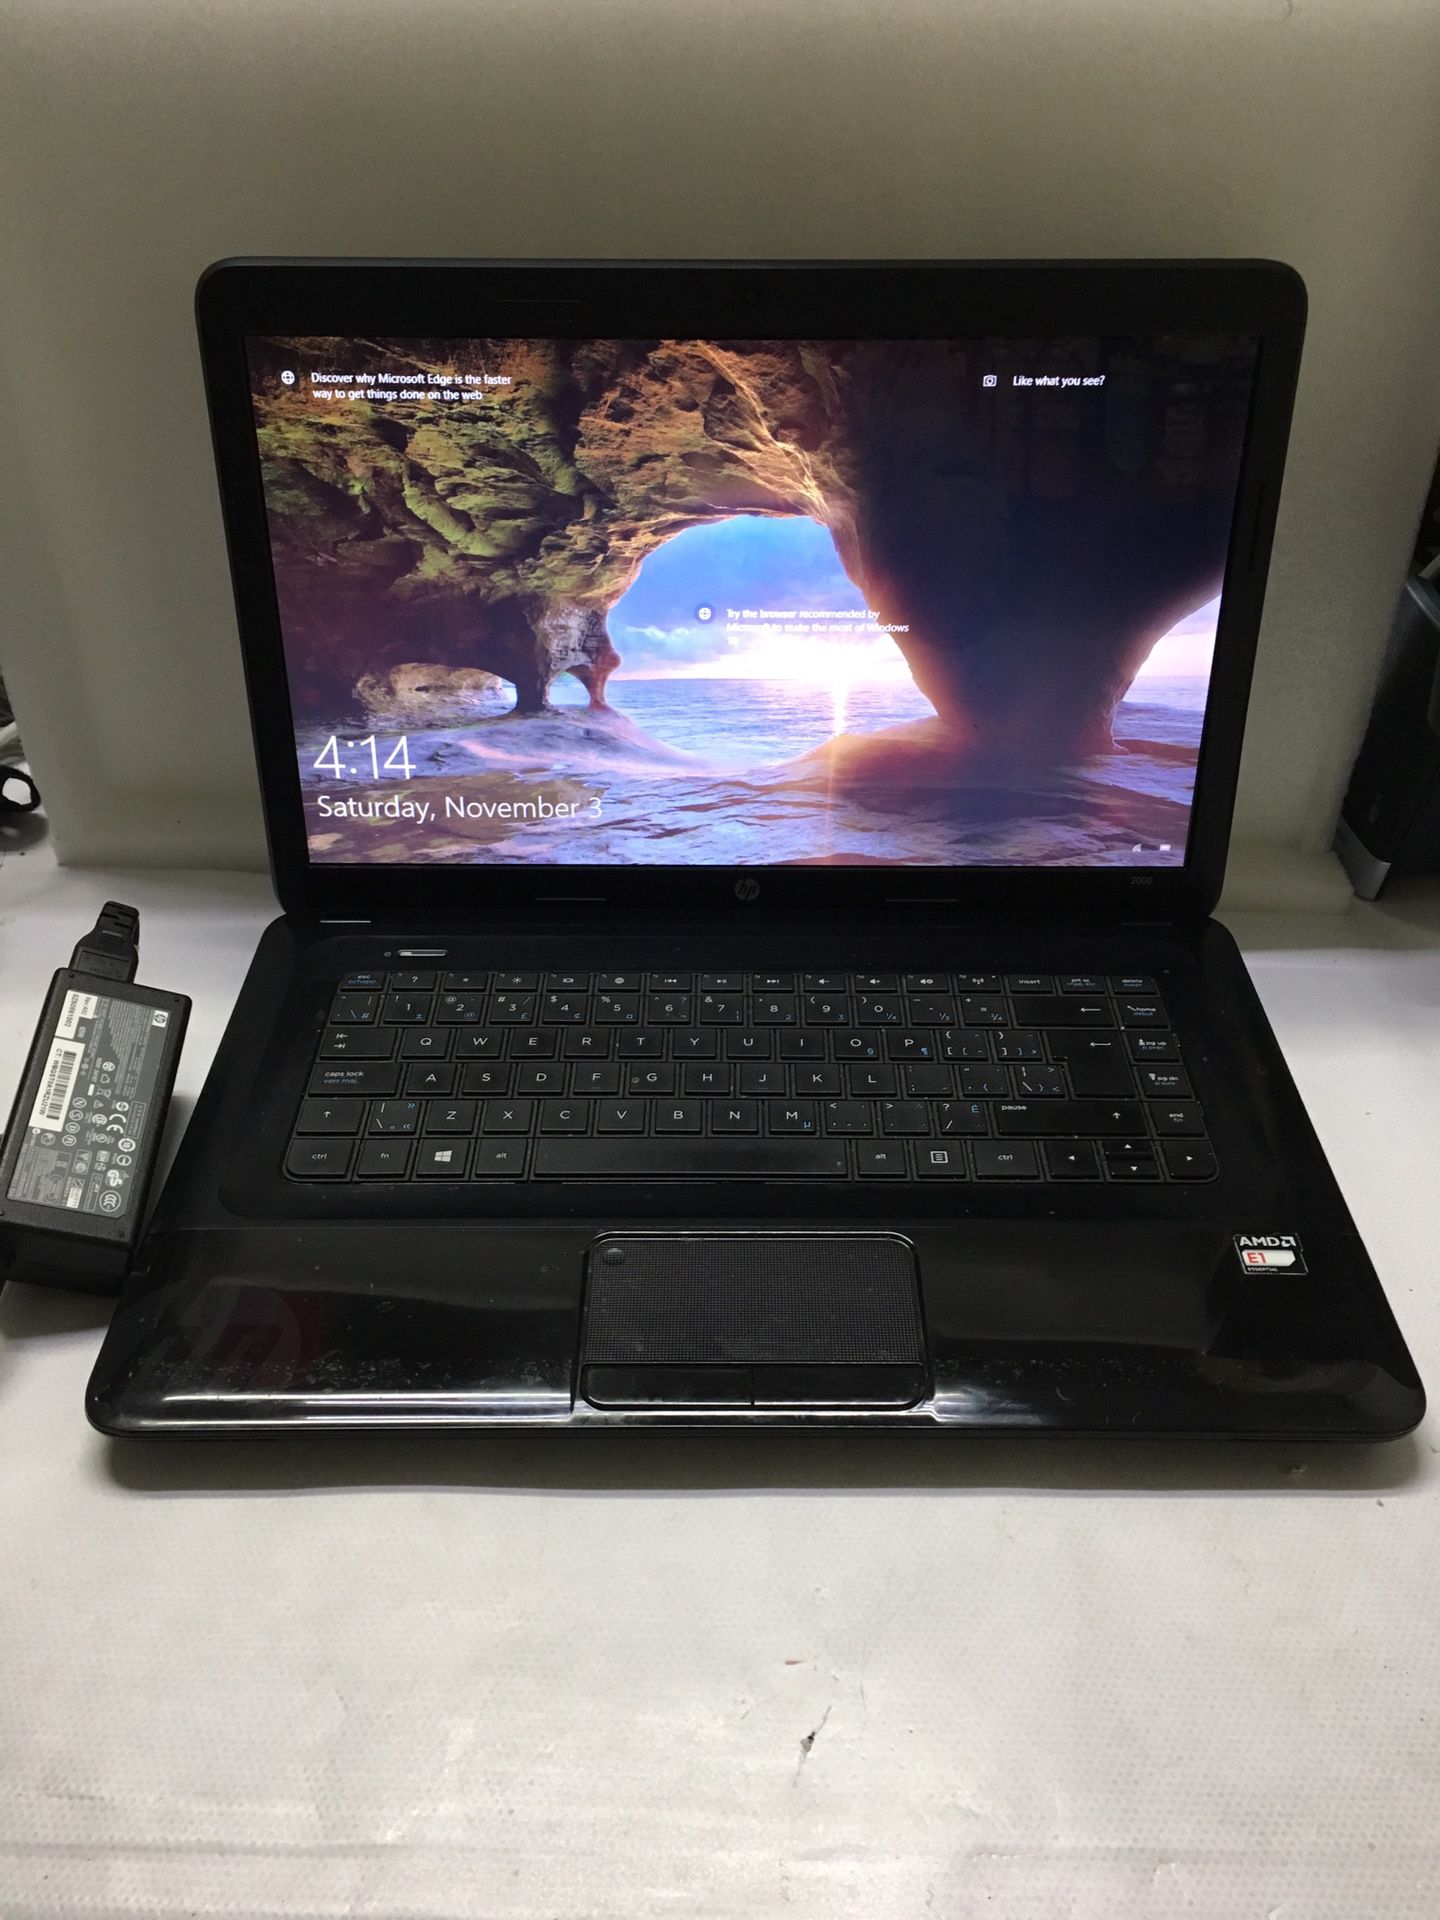 Pre Black Friday Deal HP Pavilion 2000 Notebook 15.6" pc AMD E1-1500 APU @1.46 Ghz 4 GB RAM 320 GB HDD Windows 10